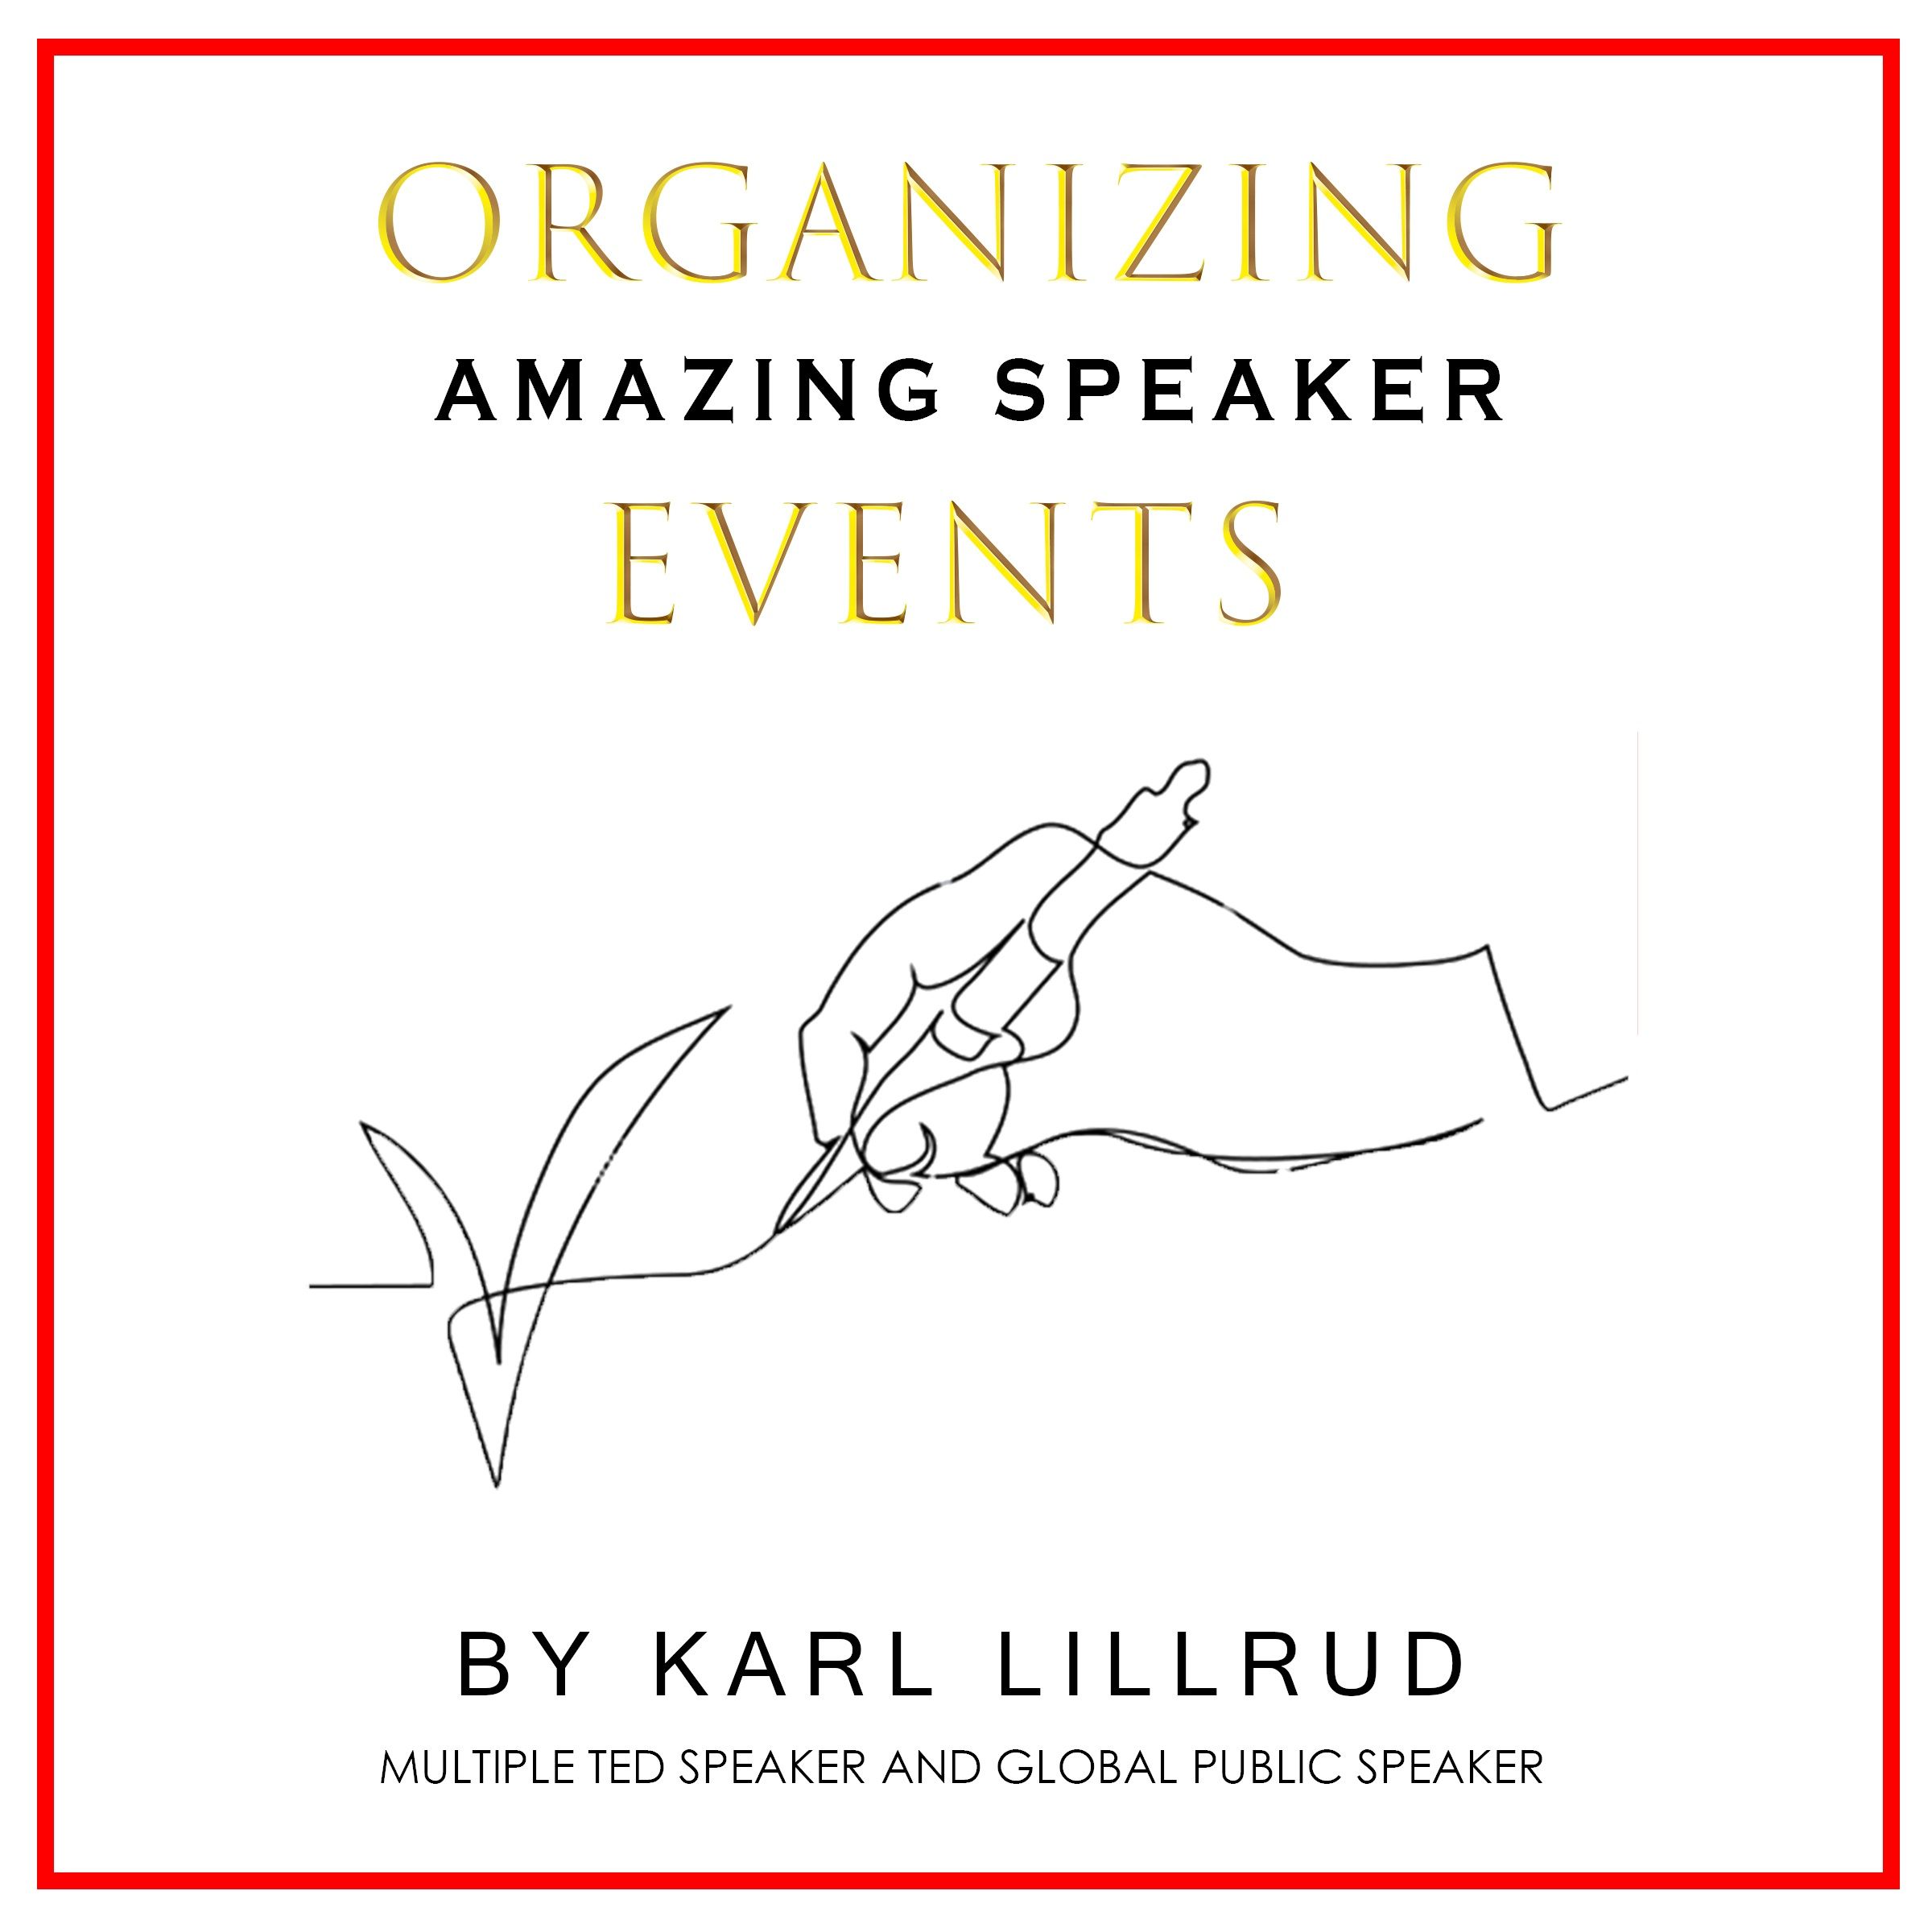 Organizing amazing speaker events, eBook by Karl Lillrud